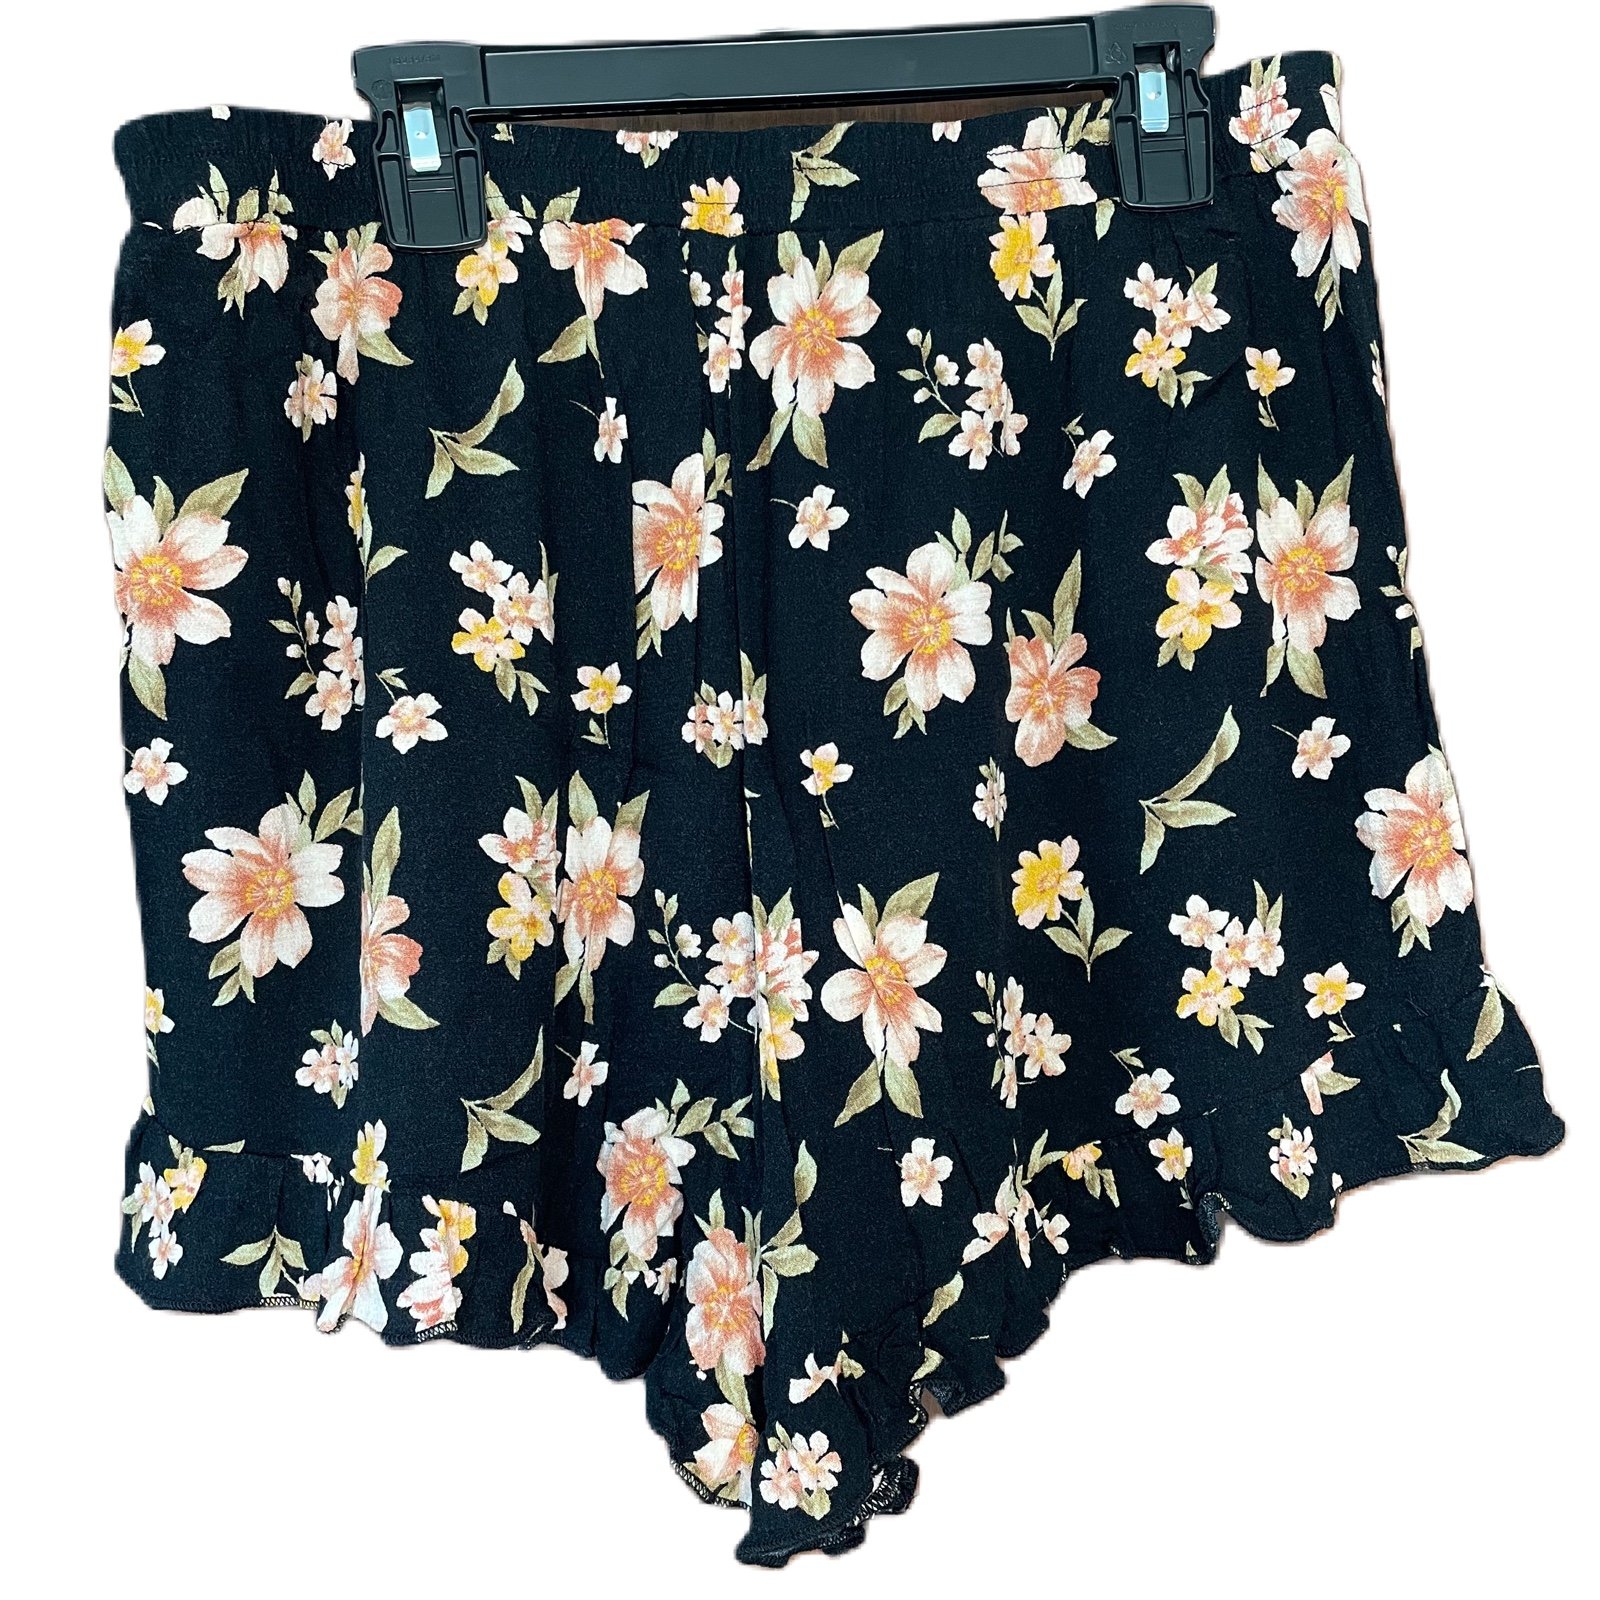 good price American Eagle Women’s Black Floral Pull On Ruffle Shorts Medium kq9QvzviT US Sale